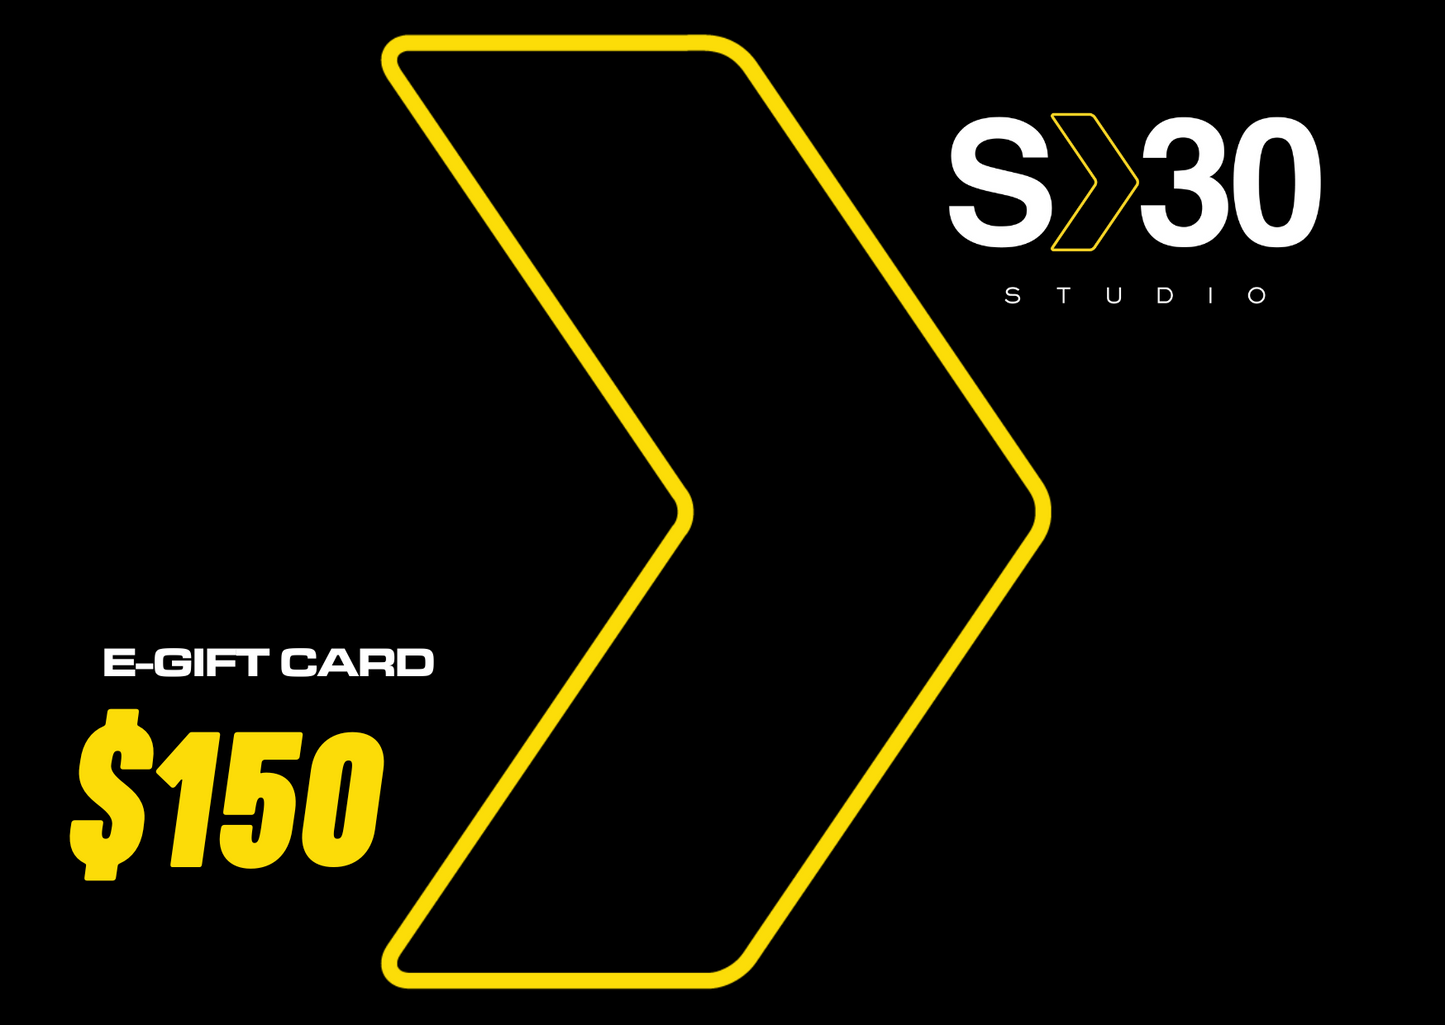 S30 Studio Gift Card